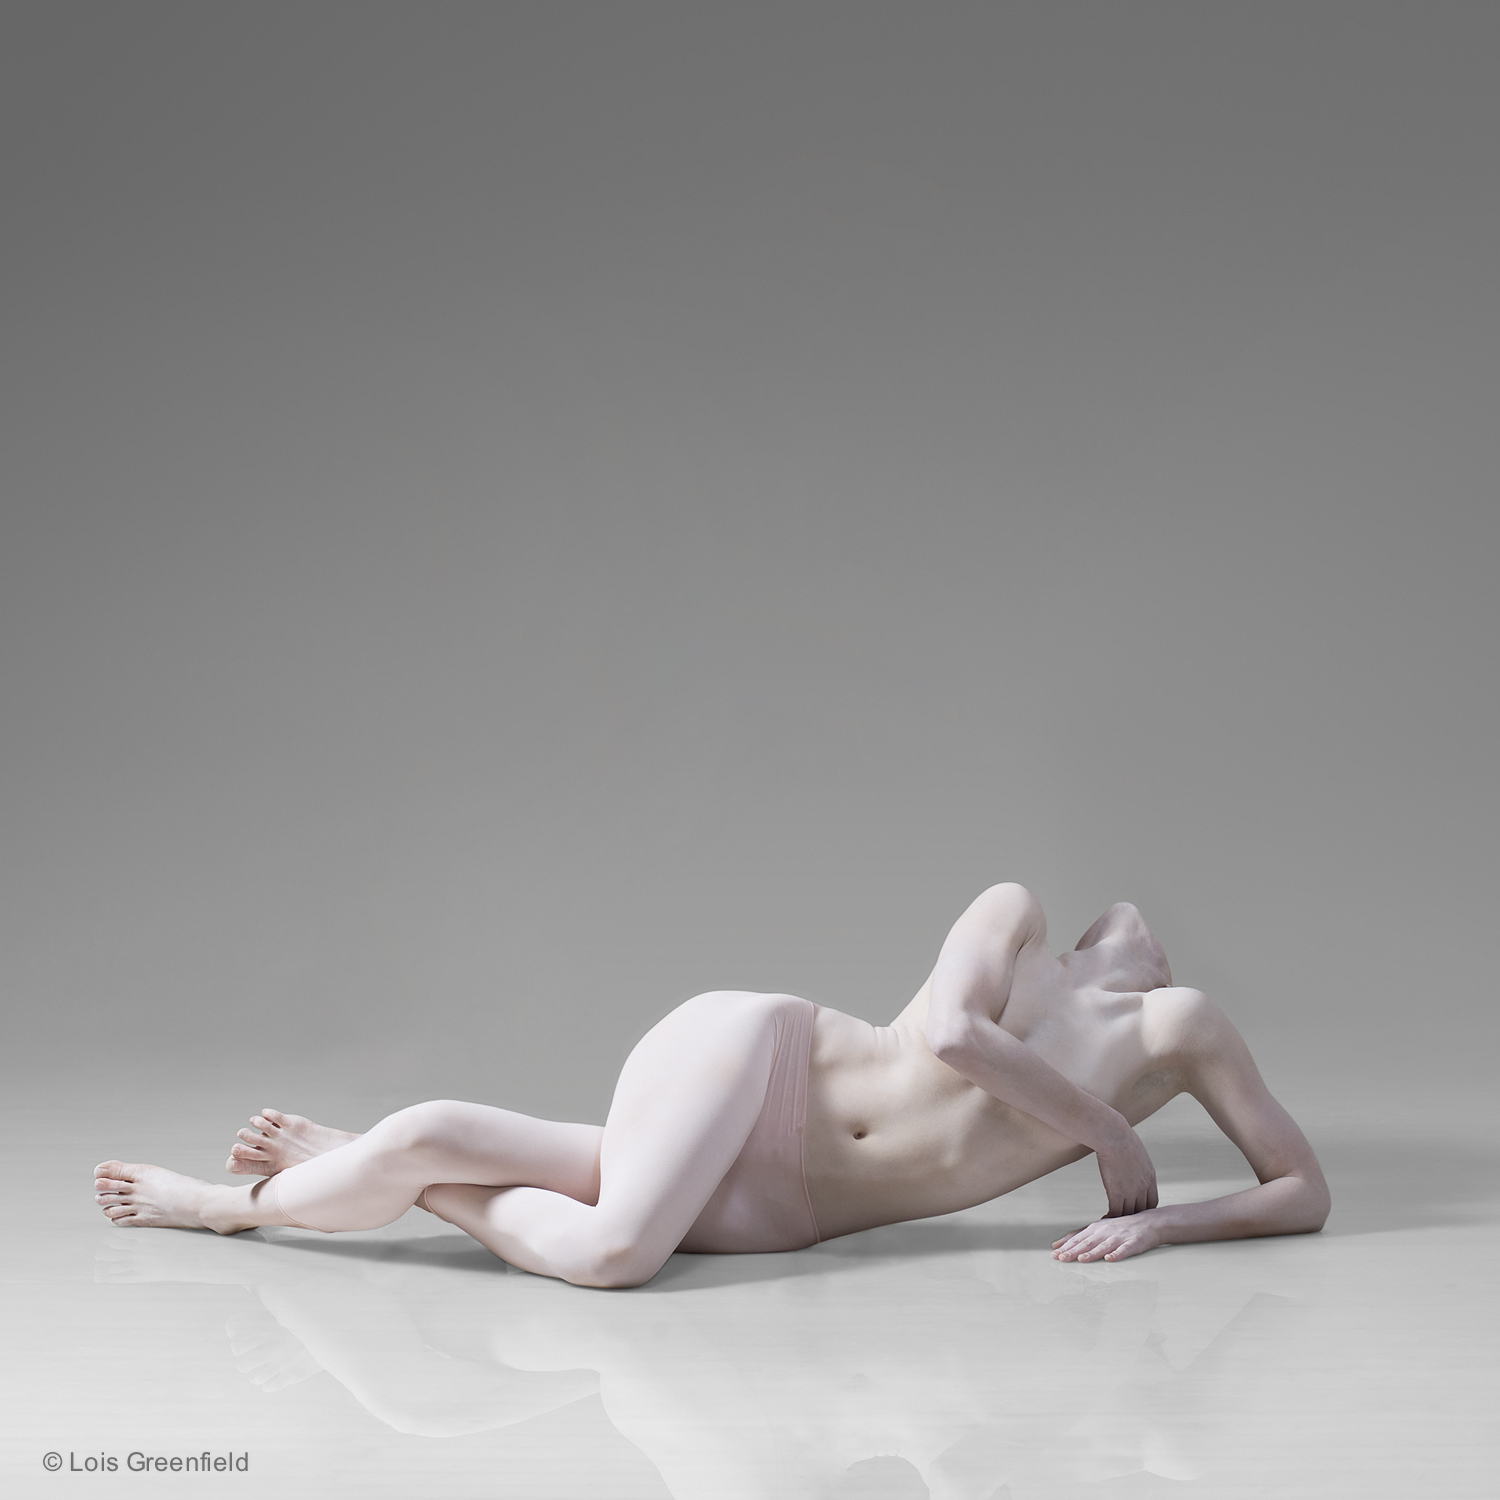 Brooke Broussard, "Re-Triptych", SHEN WEI DANCE ARTS